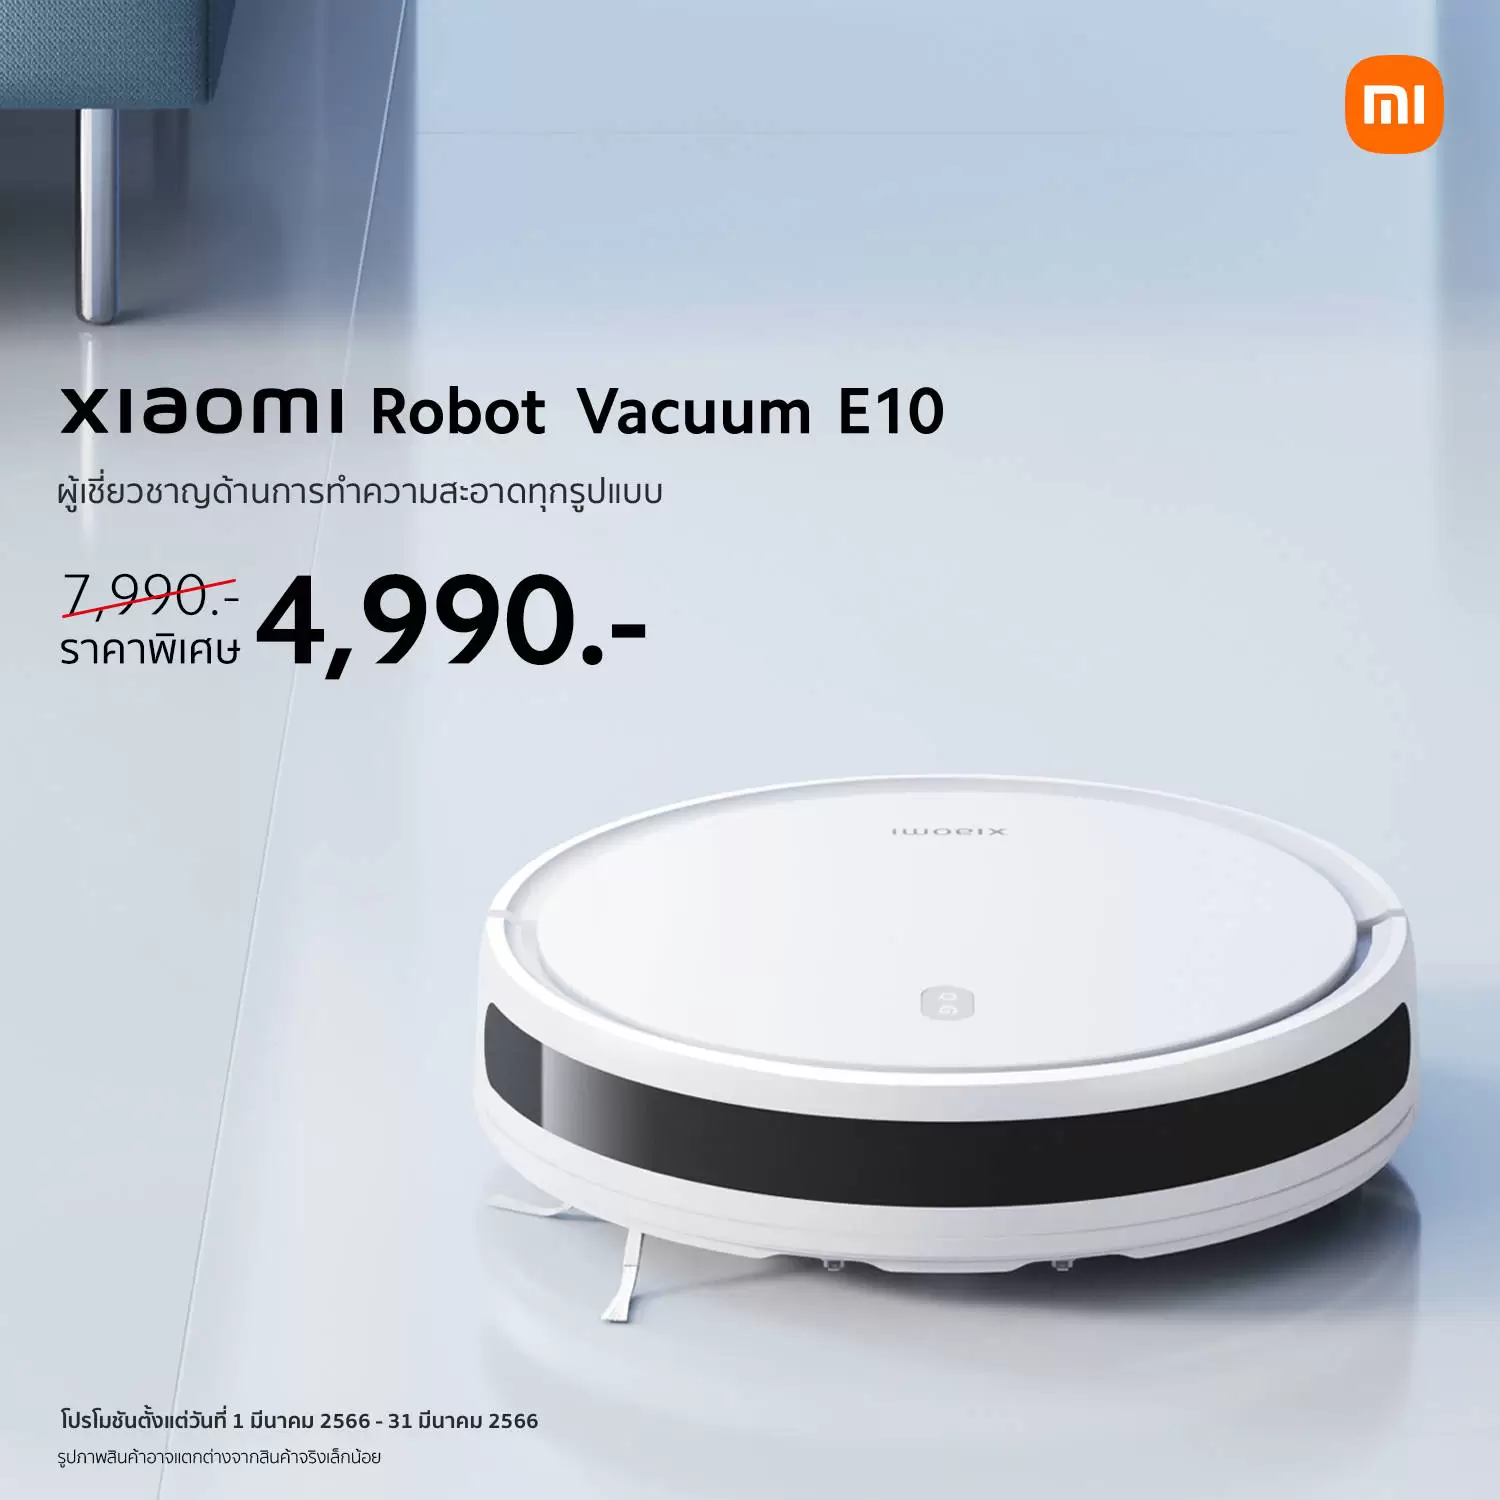 Xiaomi Robot Vacuum E10 KV | Xiaomi | รวมข้อมูล AIoT รุ่นใหม่ของ Xiaomi นาฬิกา, หูฟัง และ หุ่นยนต์ดูดฝุ่น ราคาและโปรโมชั่น